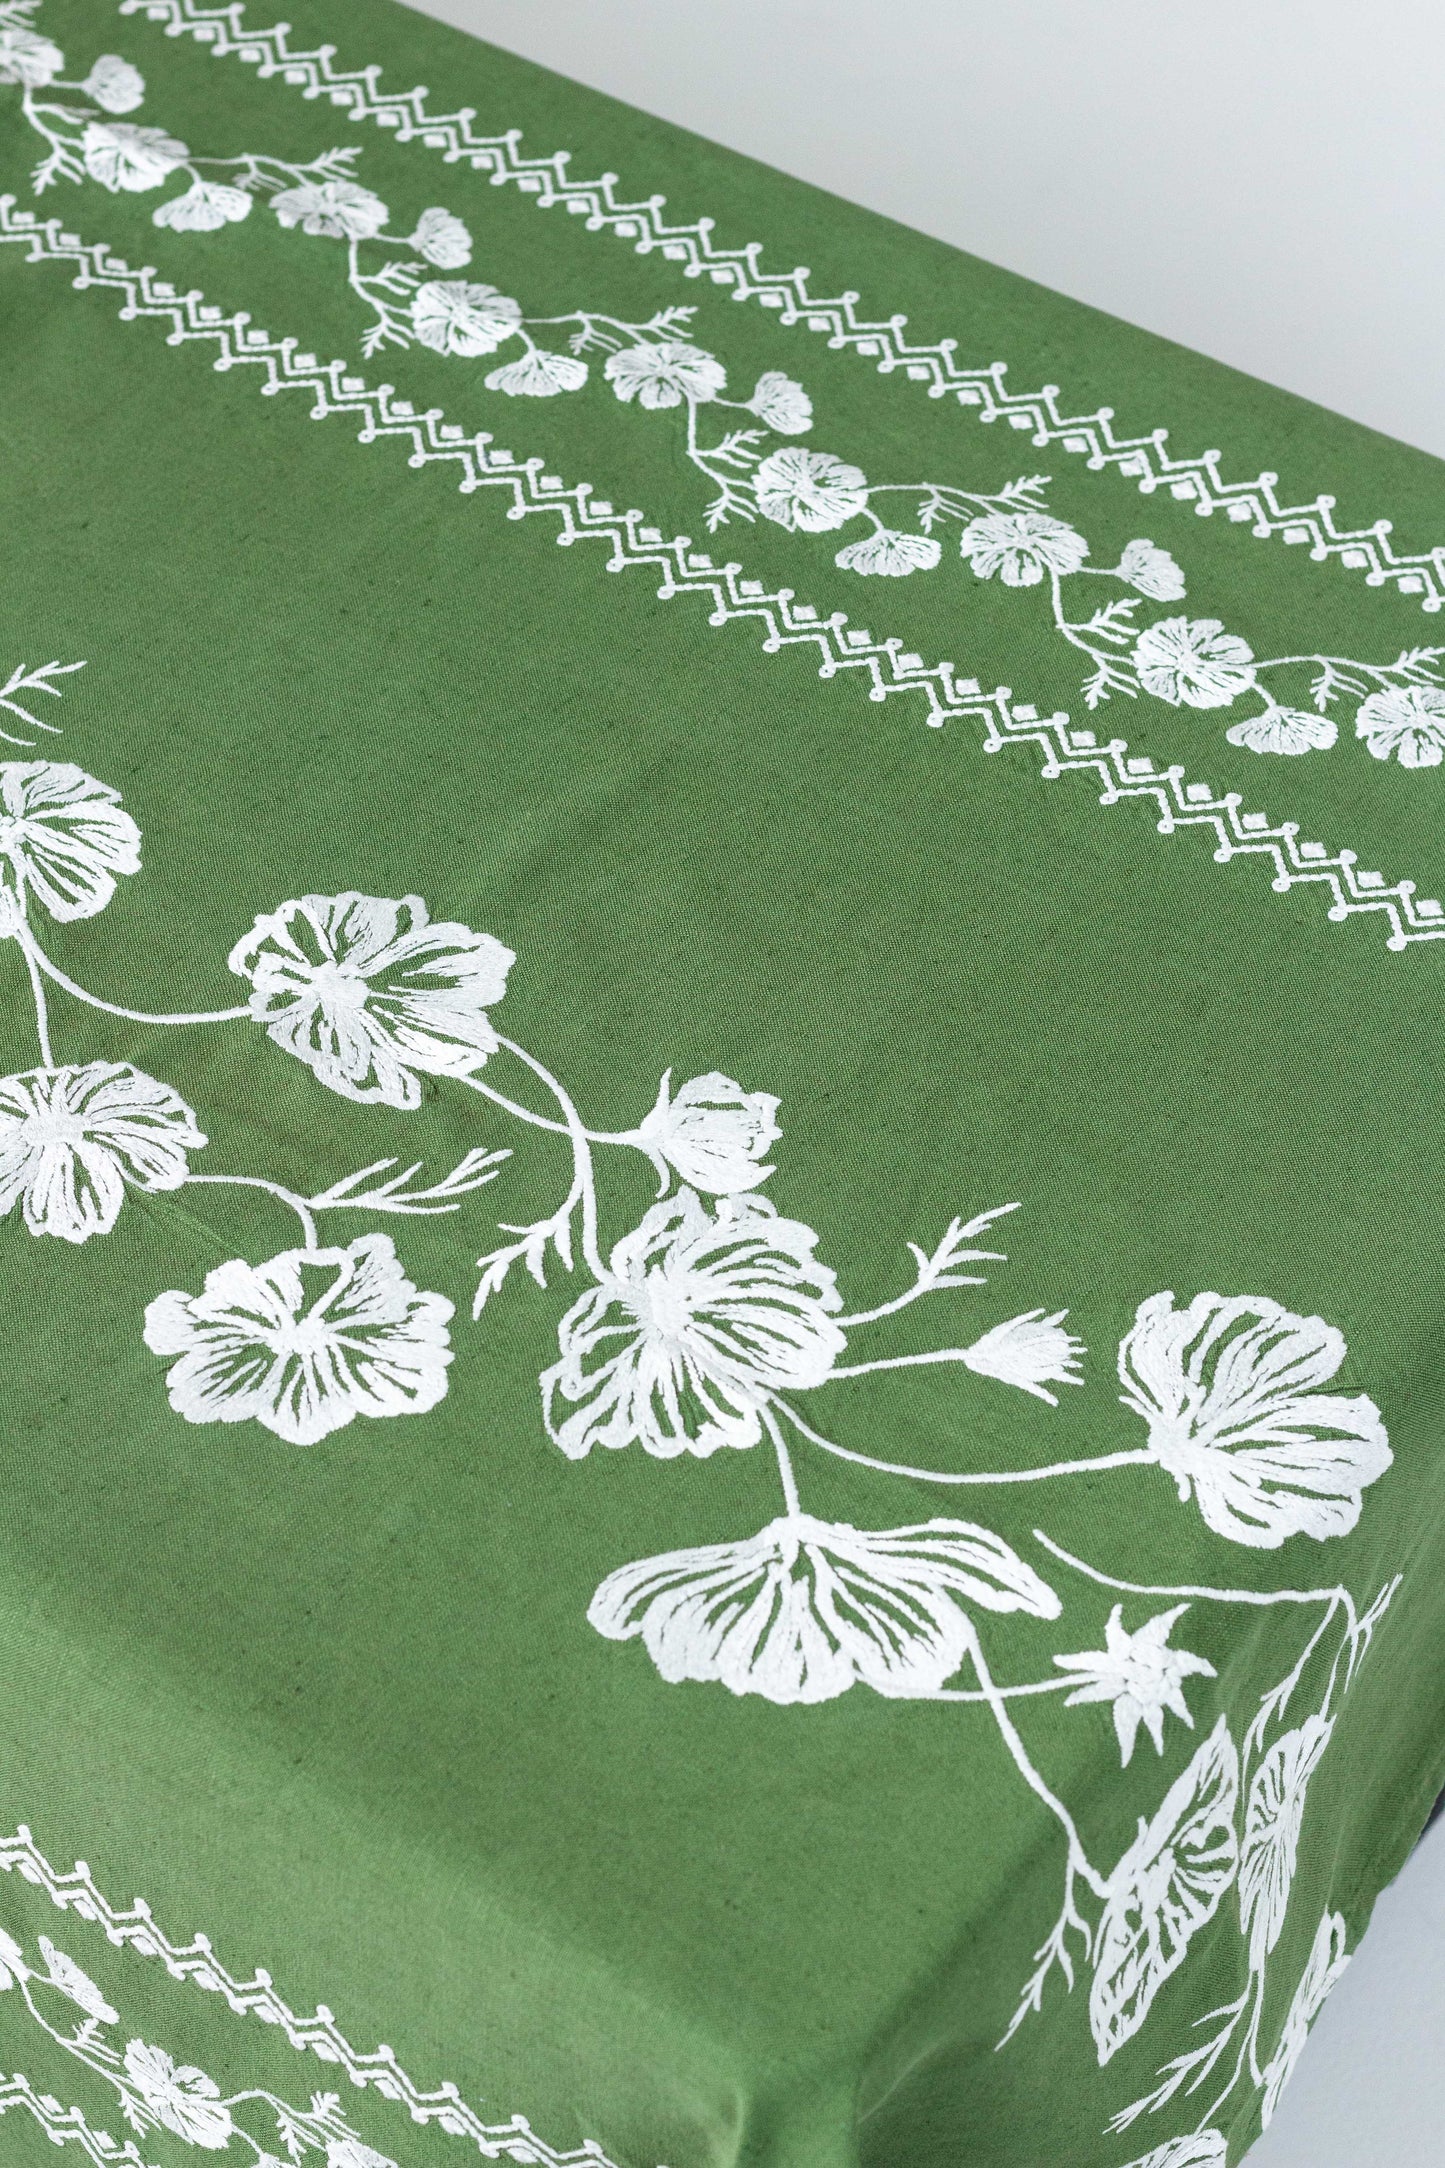 Cosmo Tablecloth Rectangular Tablecloth for 6